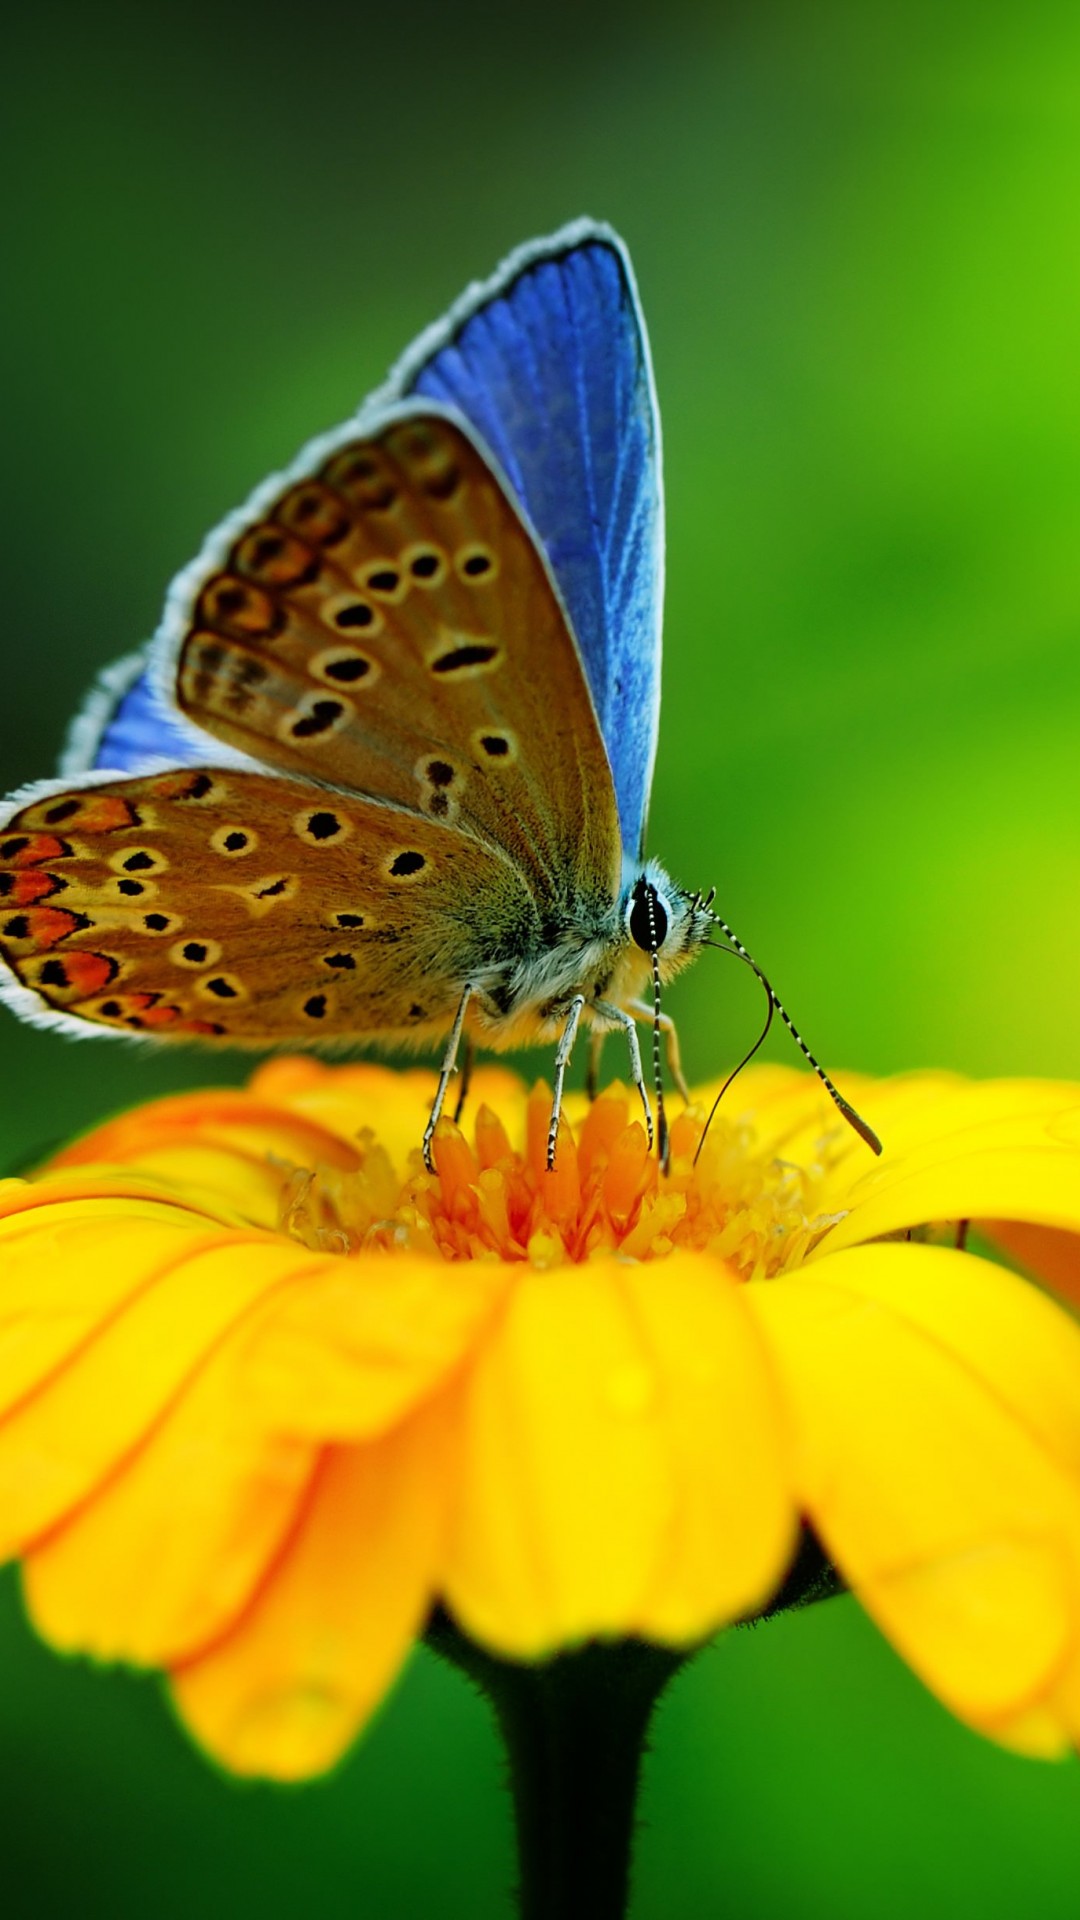 Butterfly Collecting Pollen Wallpaper for Google Nexus 5X